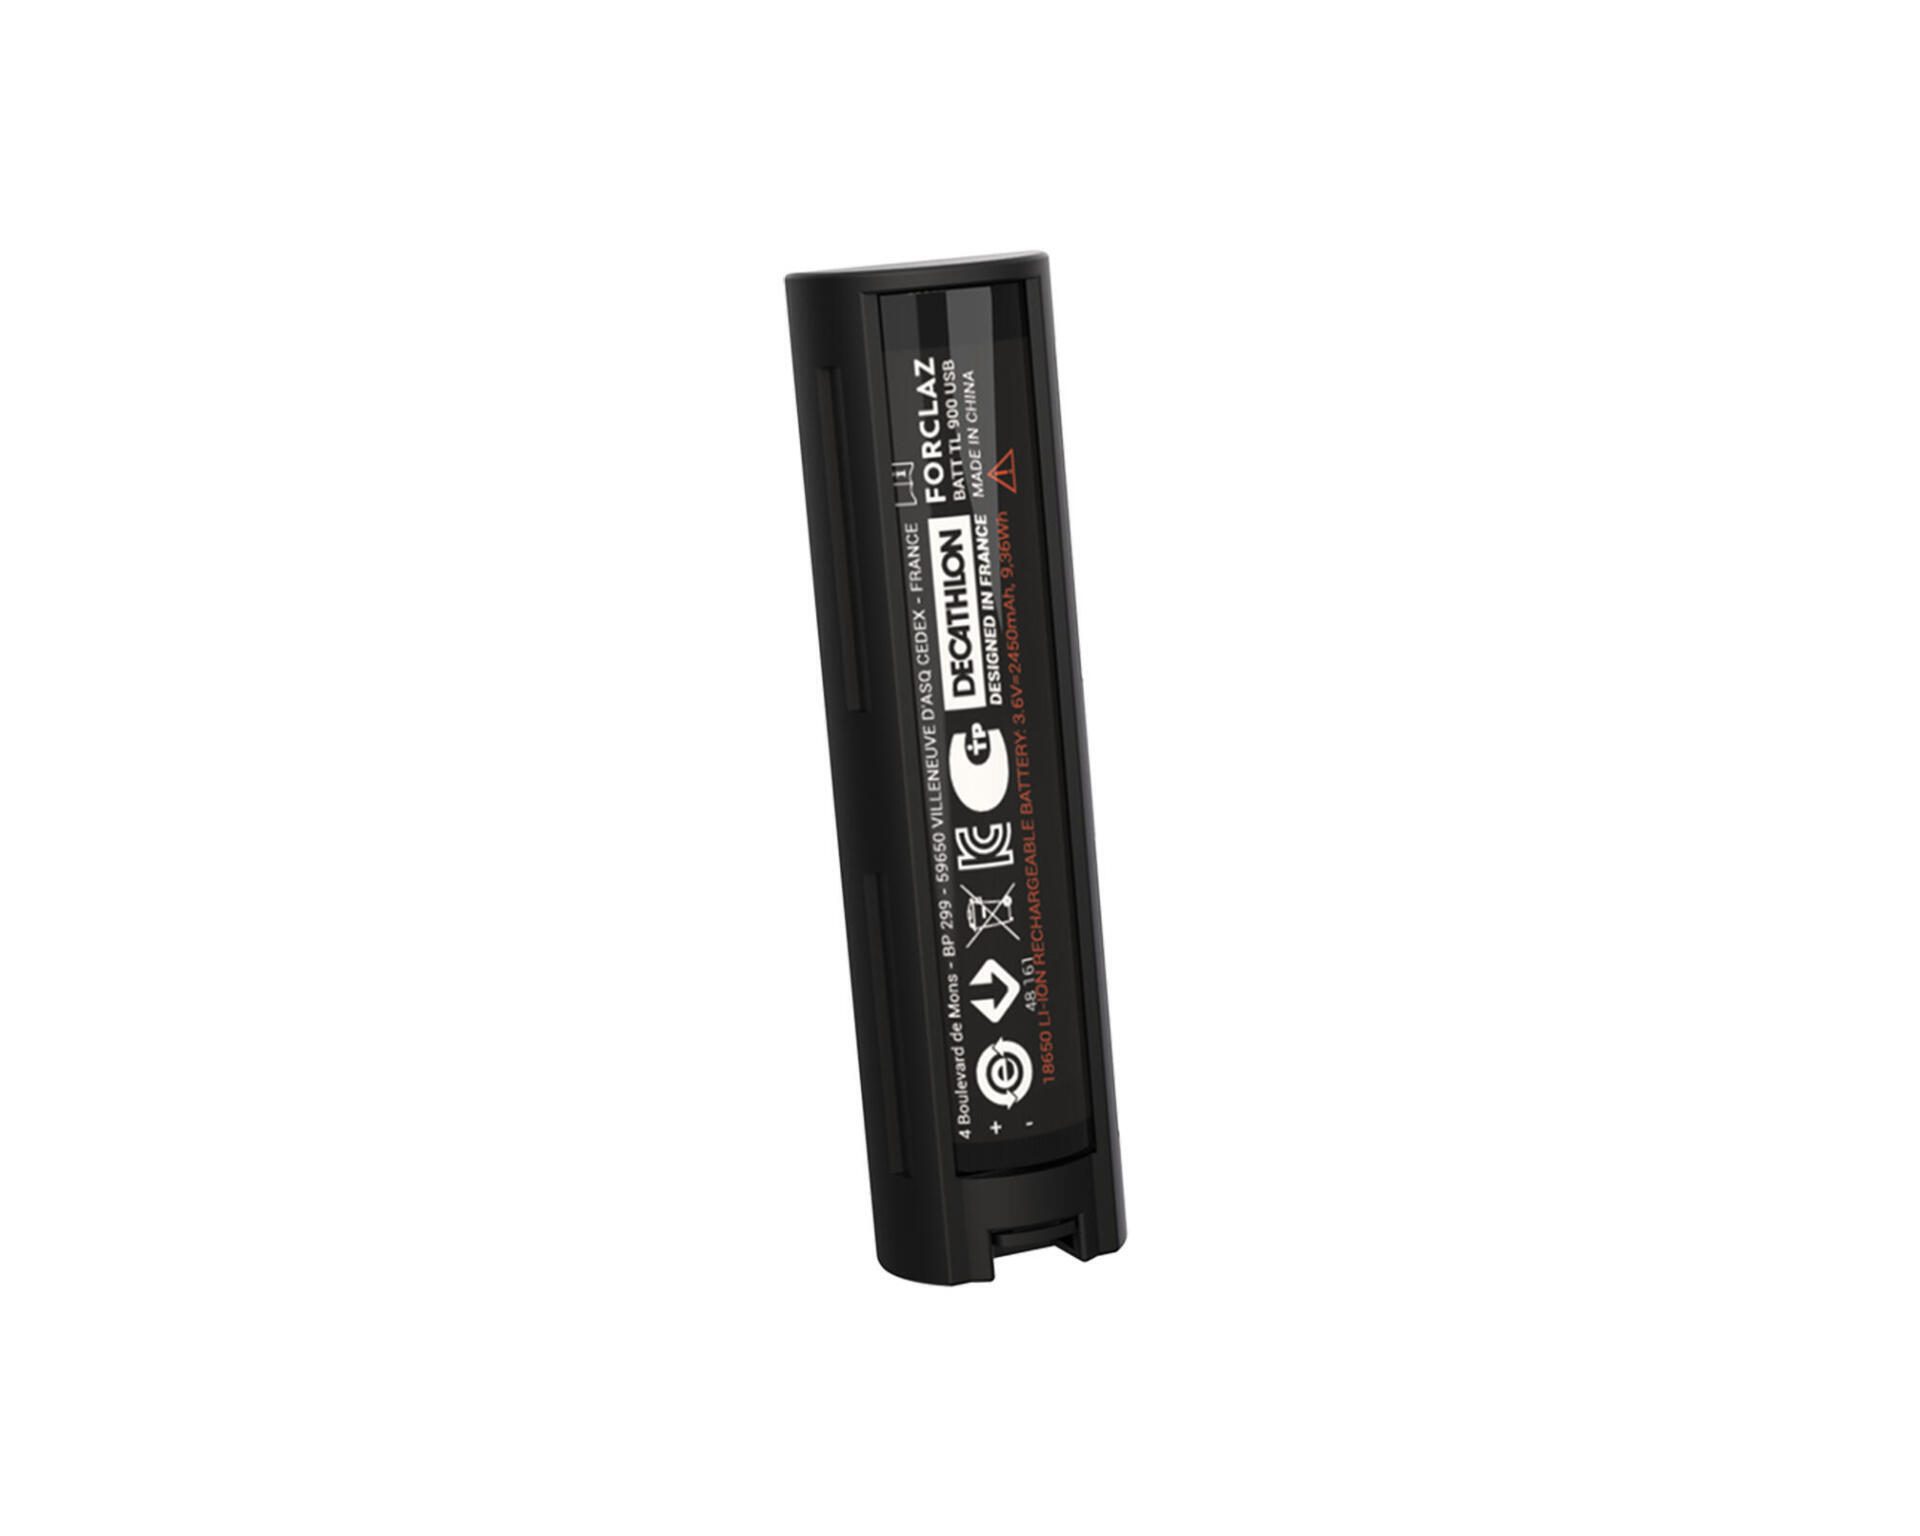 Batterie TL900 USB - 2600 mAh